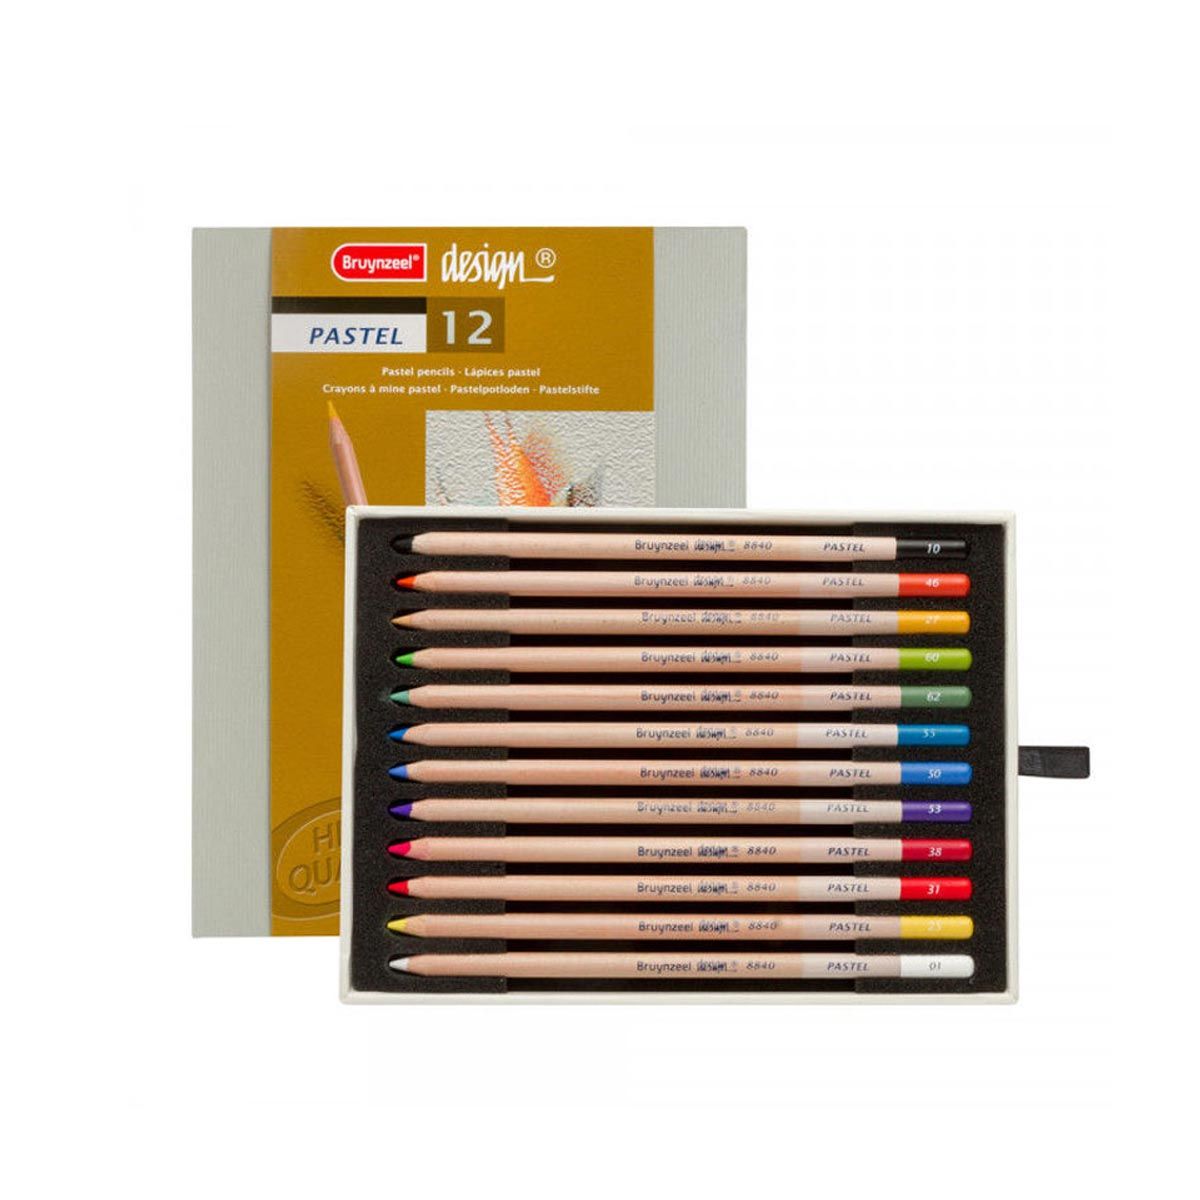 Bruynzeel Design Pastel Pencil Set of 12